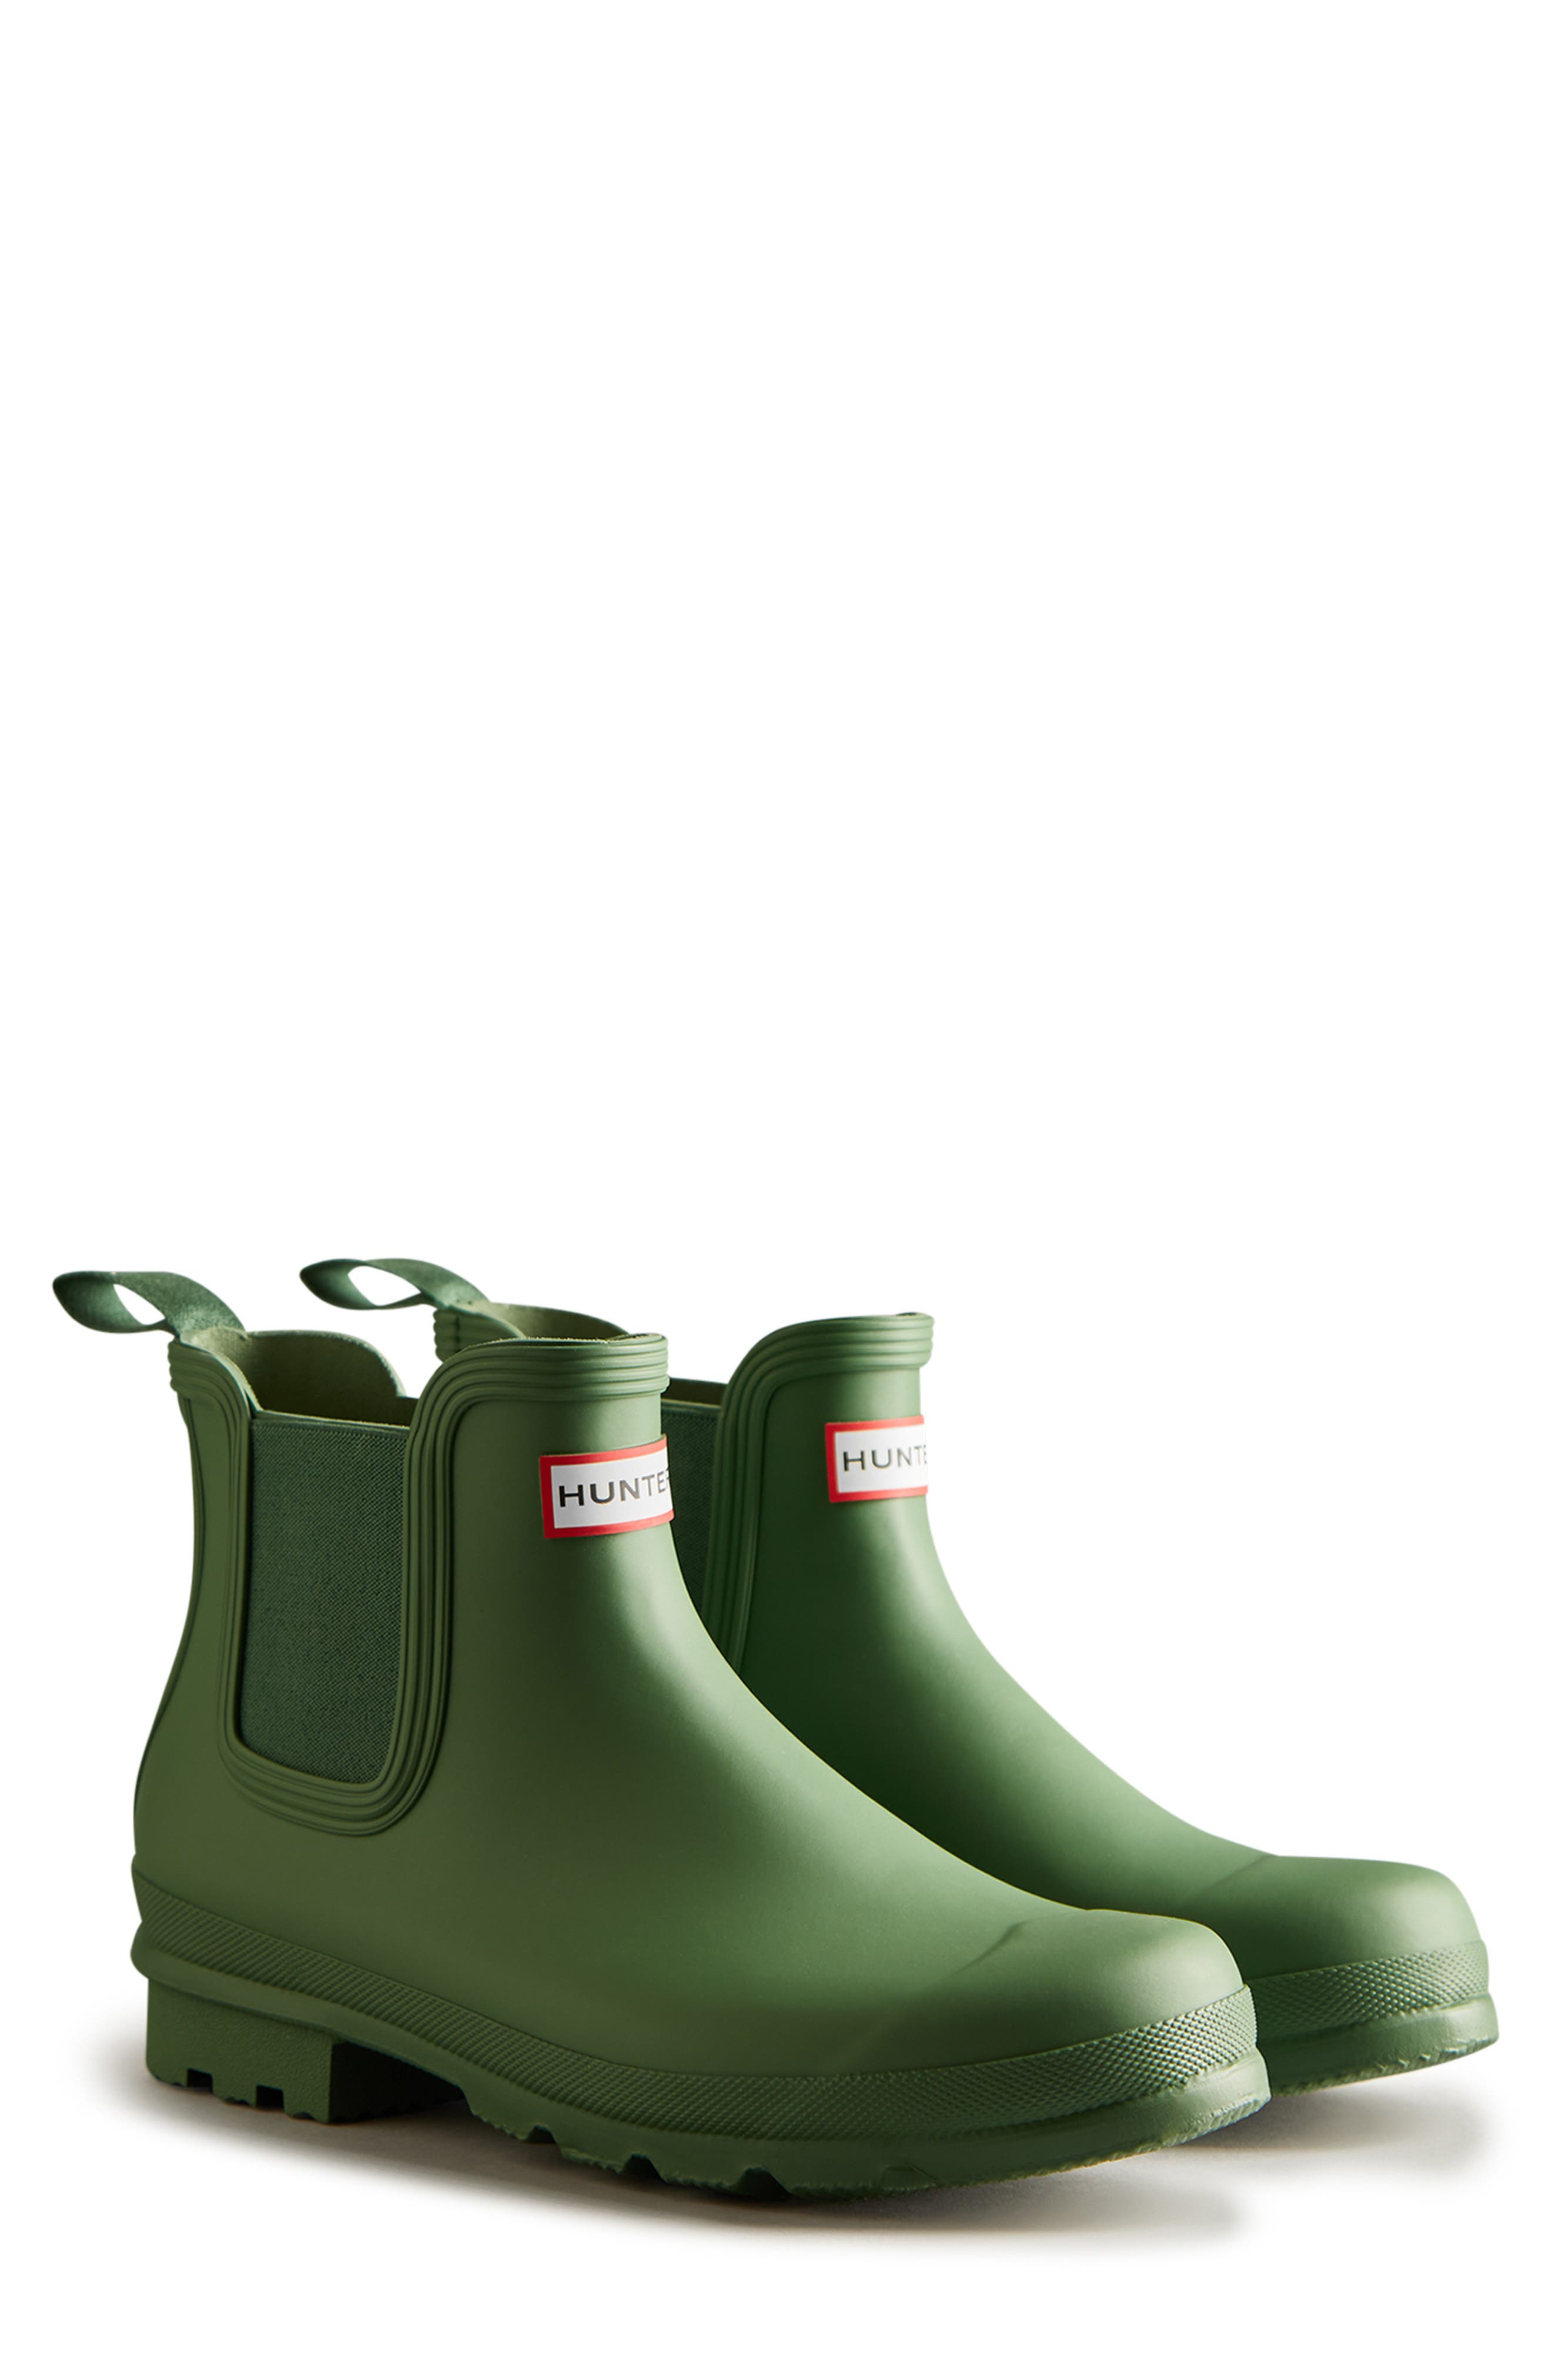 Mens Shoes Boots Wellington and rain boots HUNTER Rubber Original Short Rain Boots for Men 